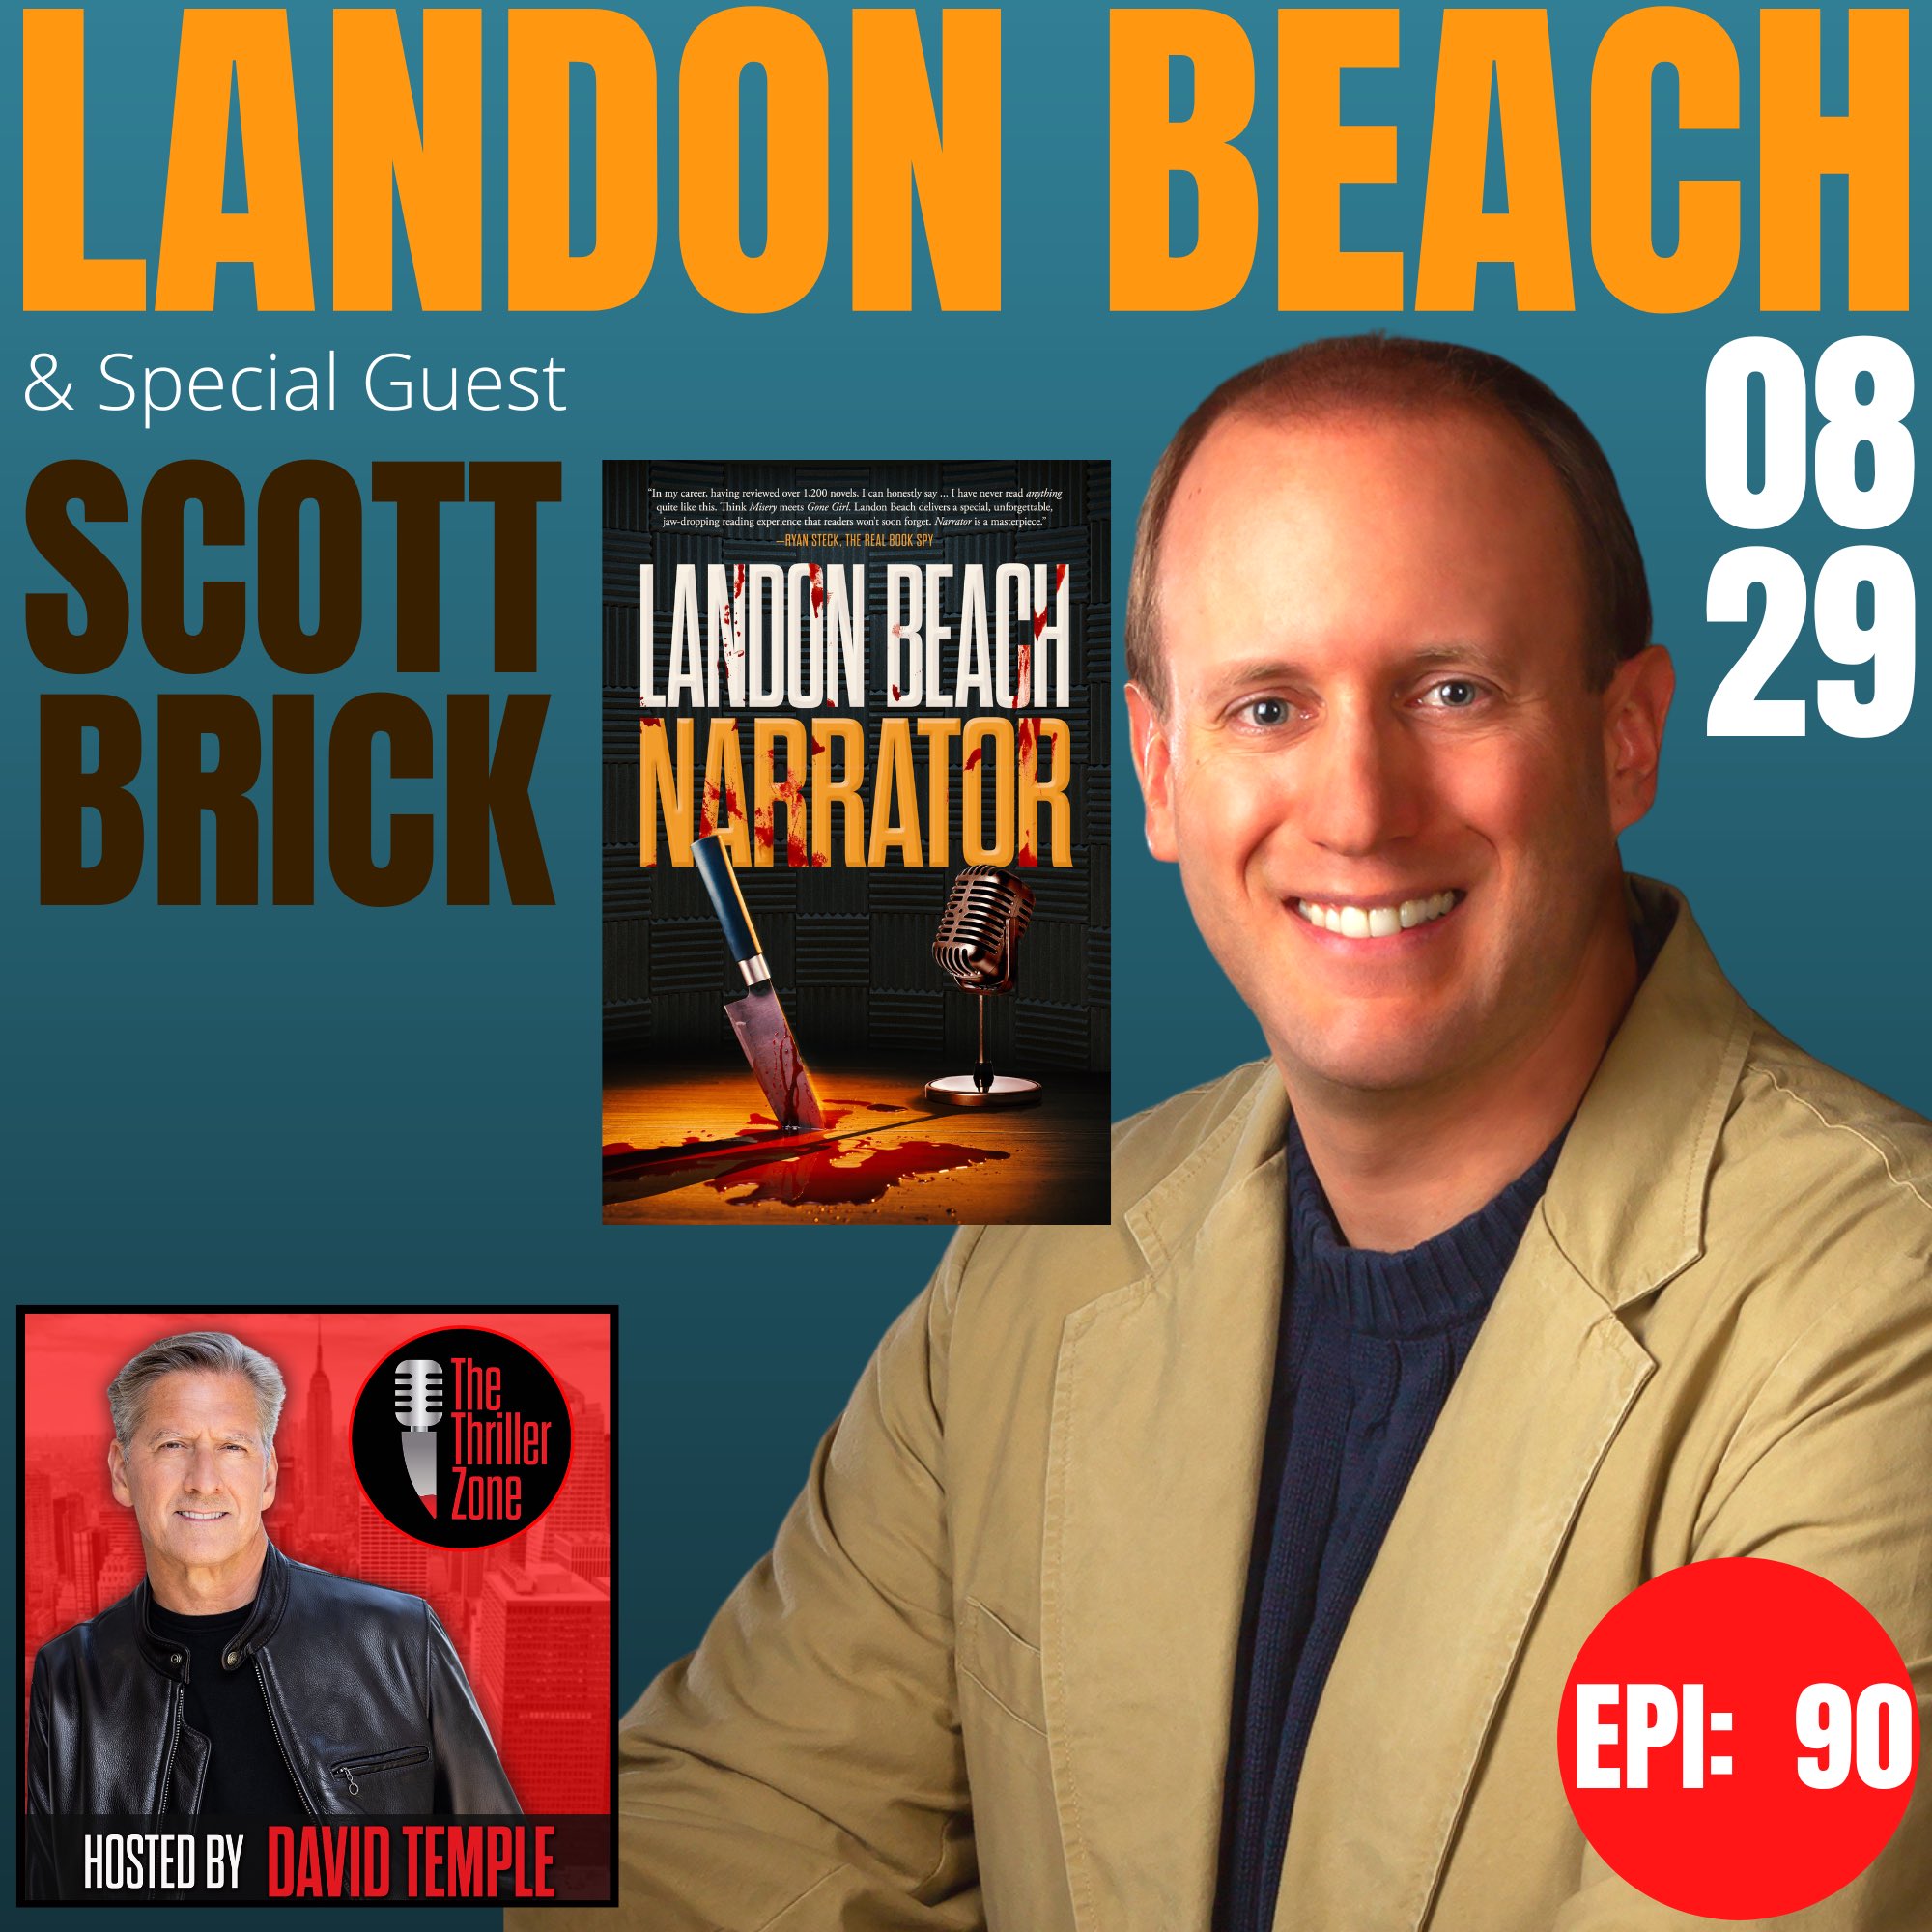 Landon Beach, author of Narrator Image